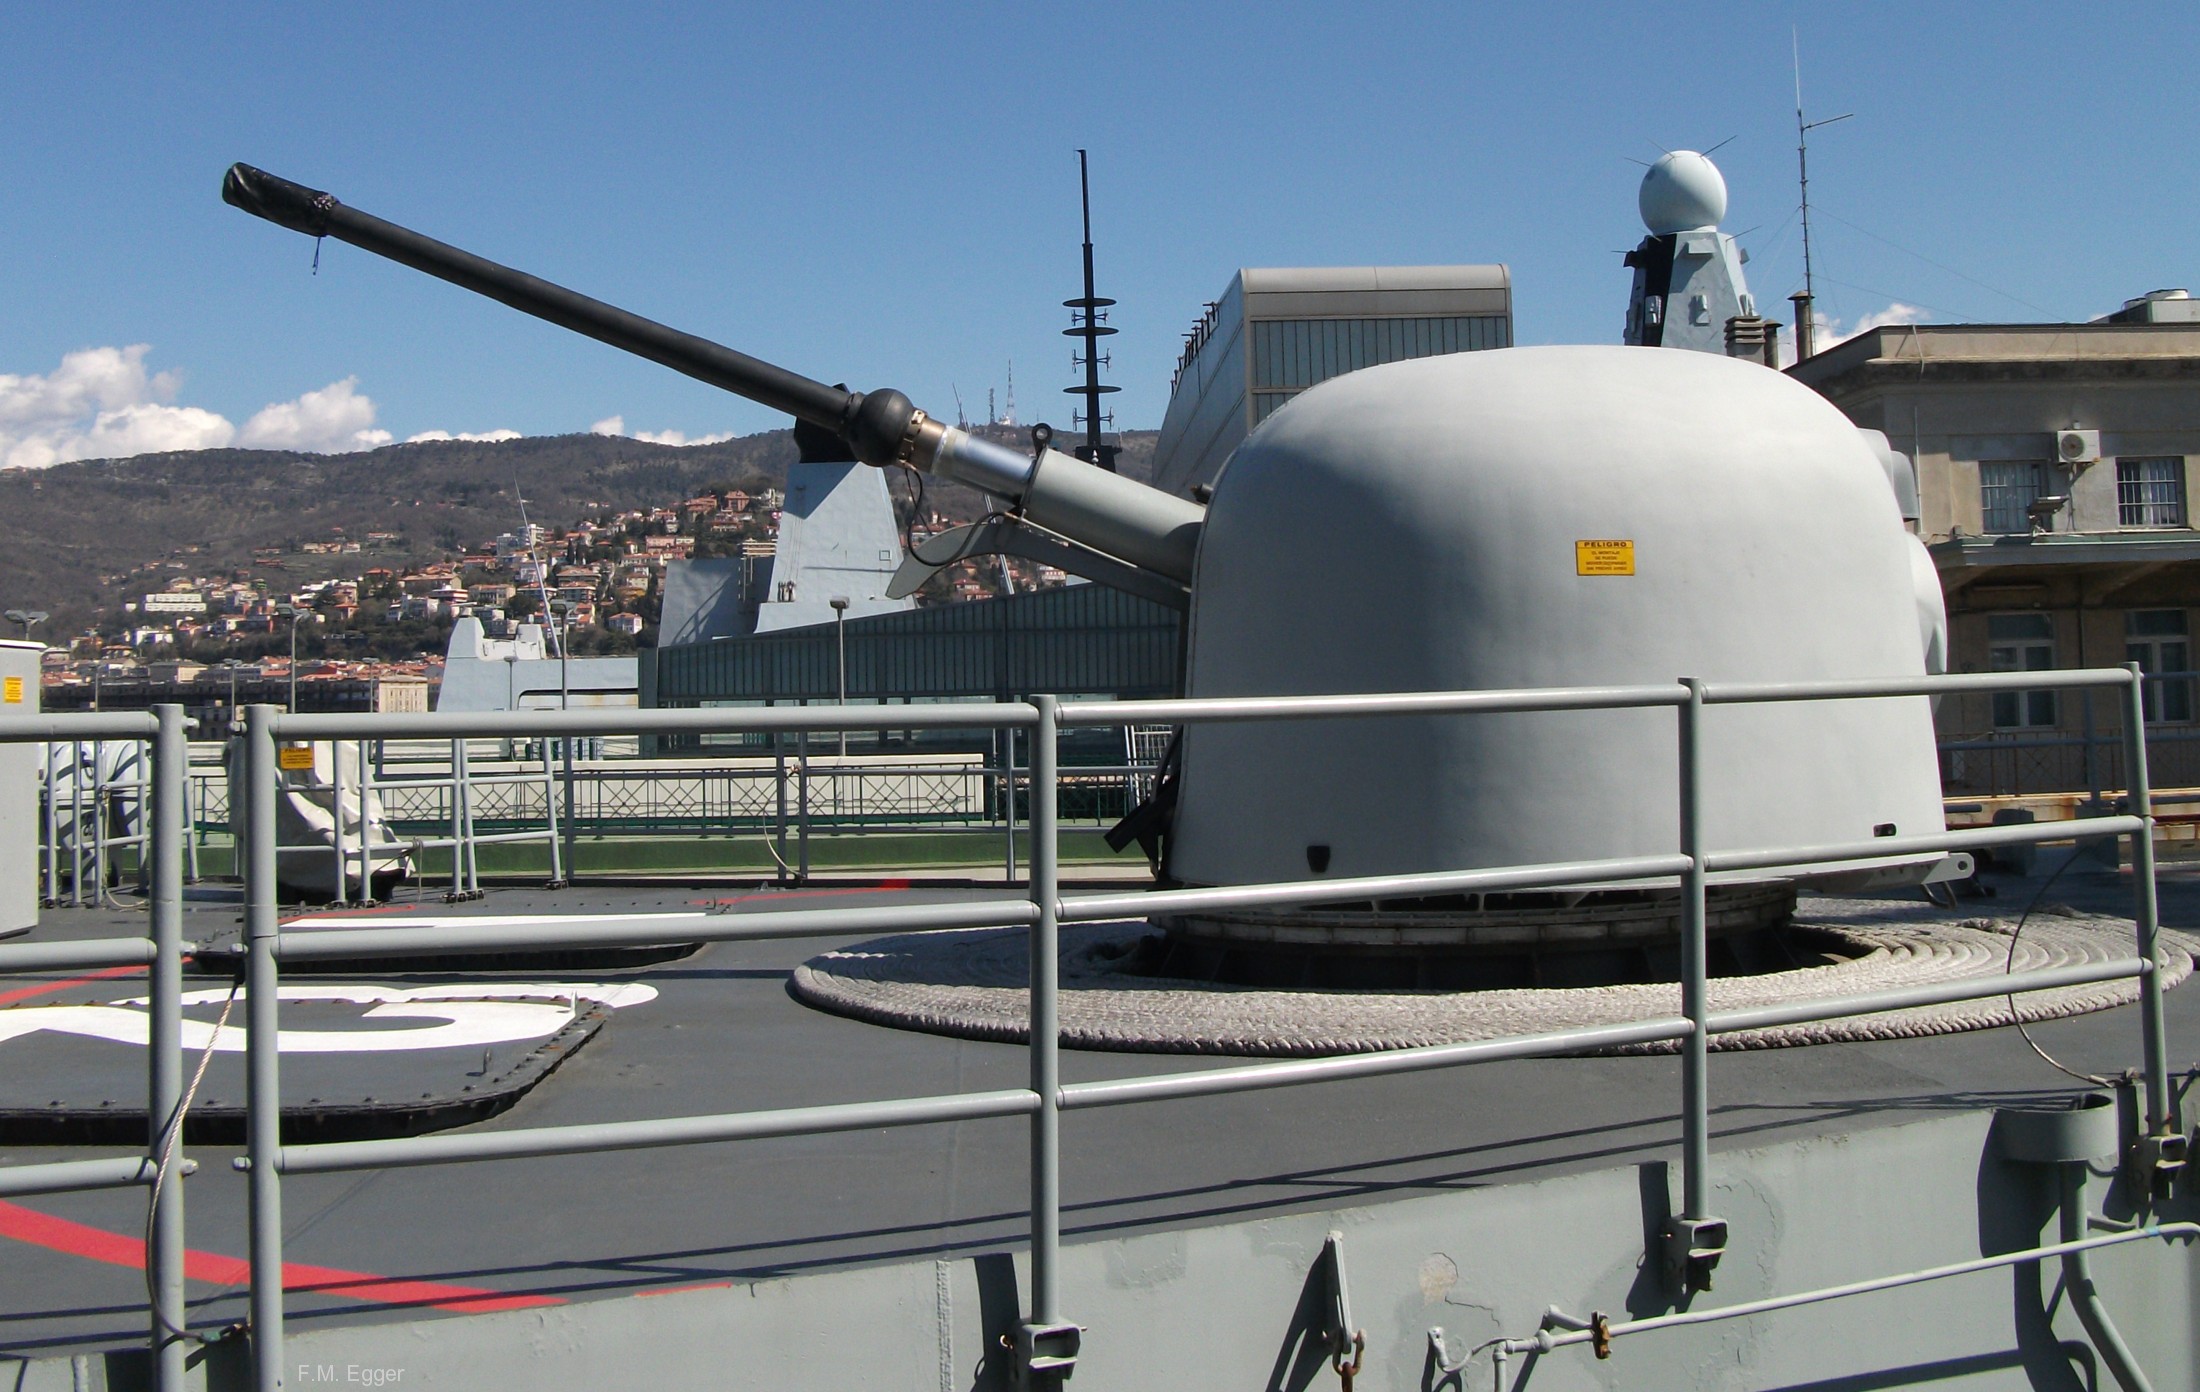 santa maria f80 class guided missile frigate spanish navy armada 22 oto melara 76/62 gun 3-inches